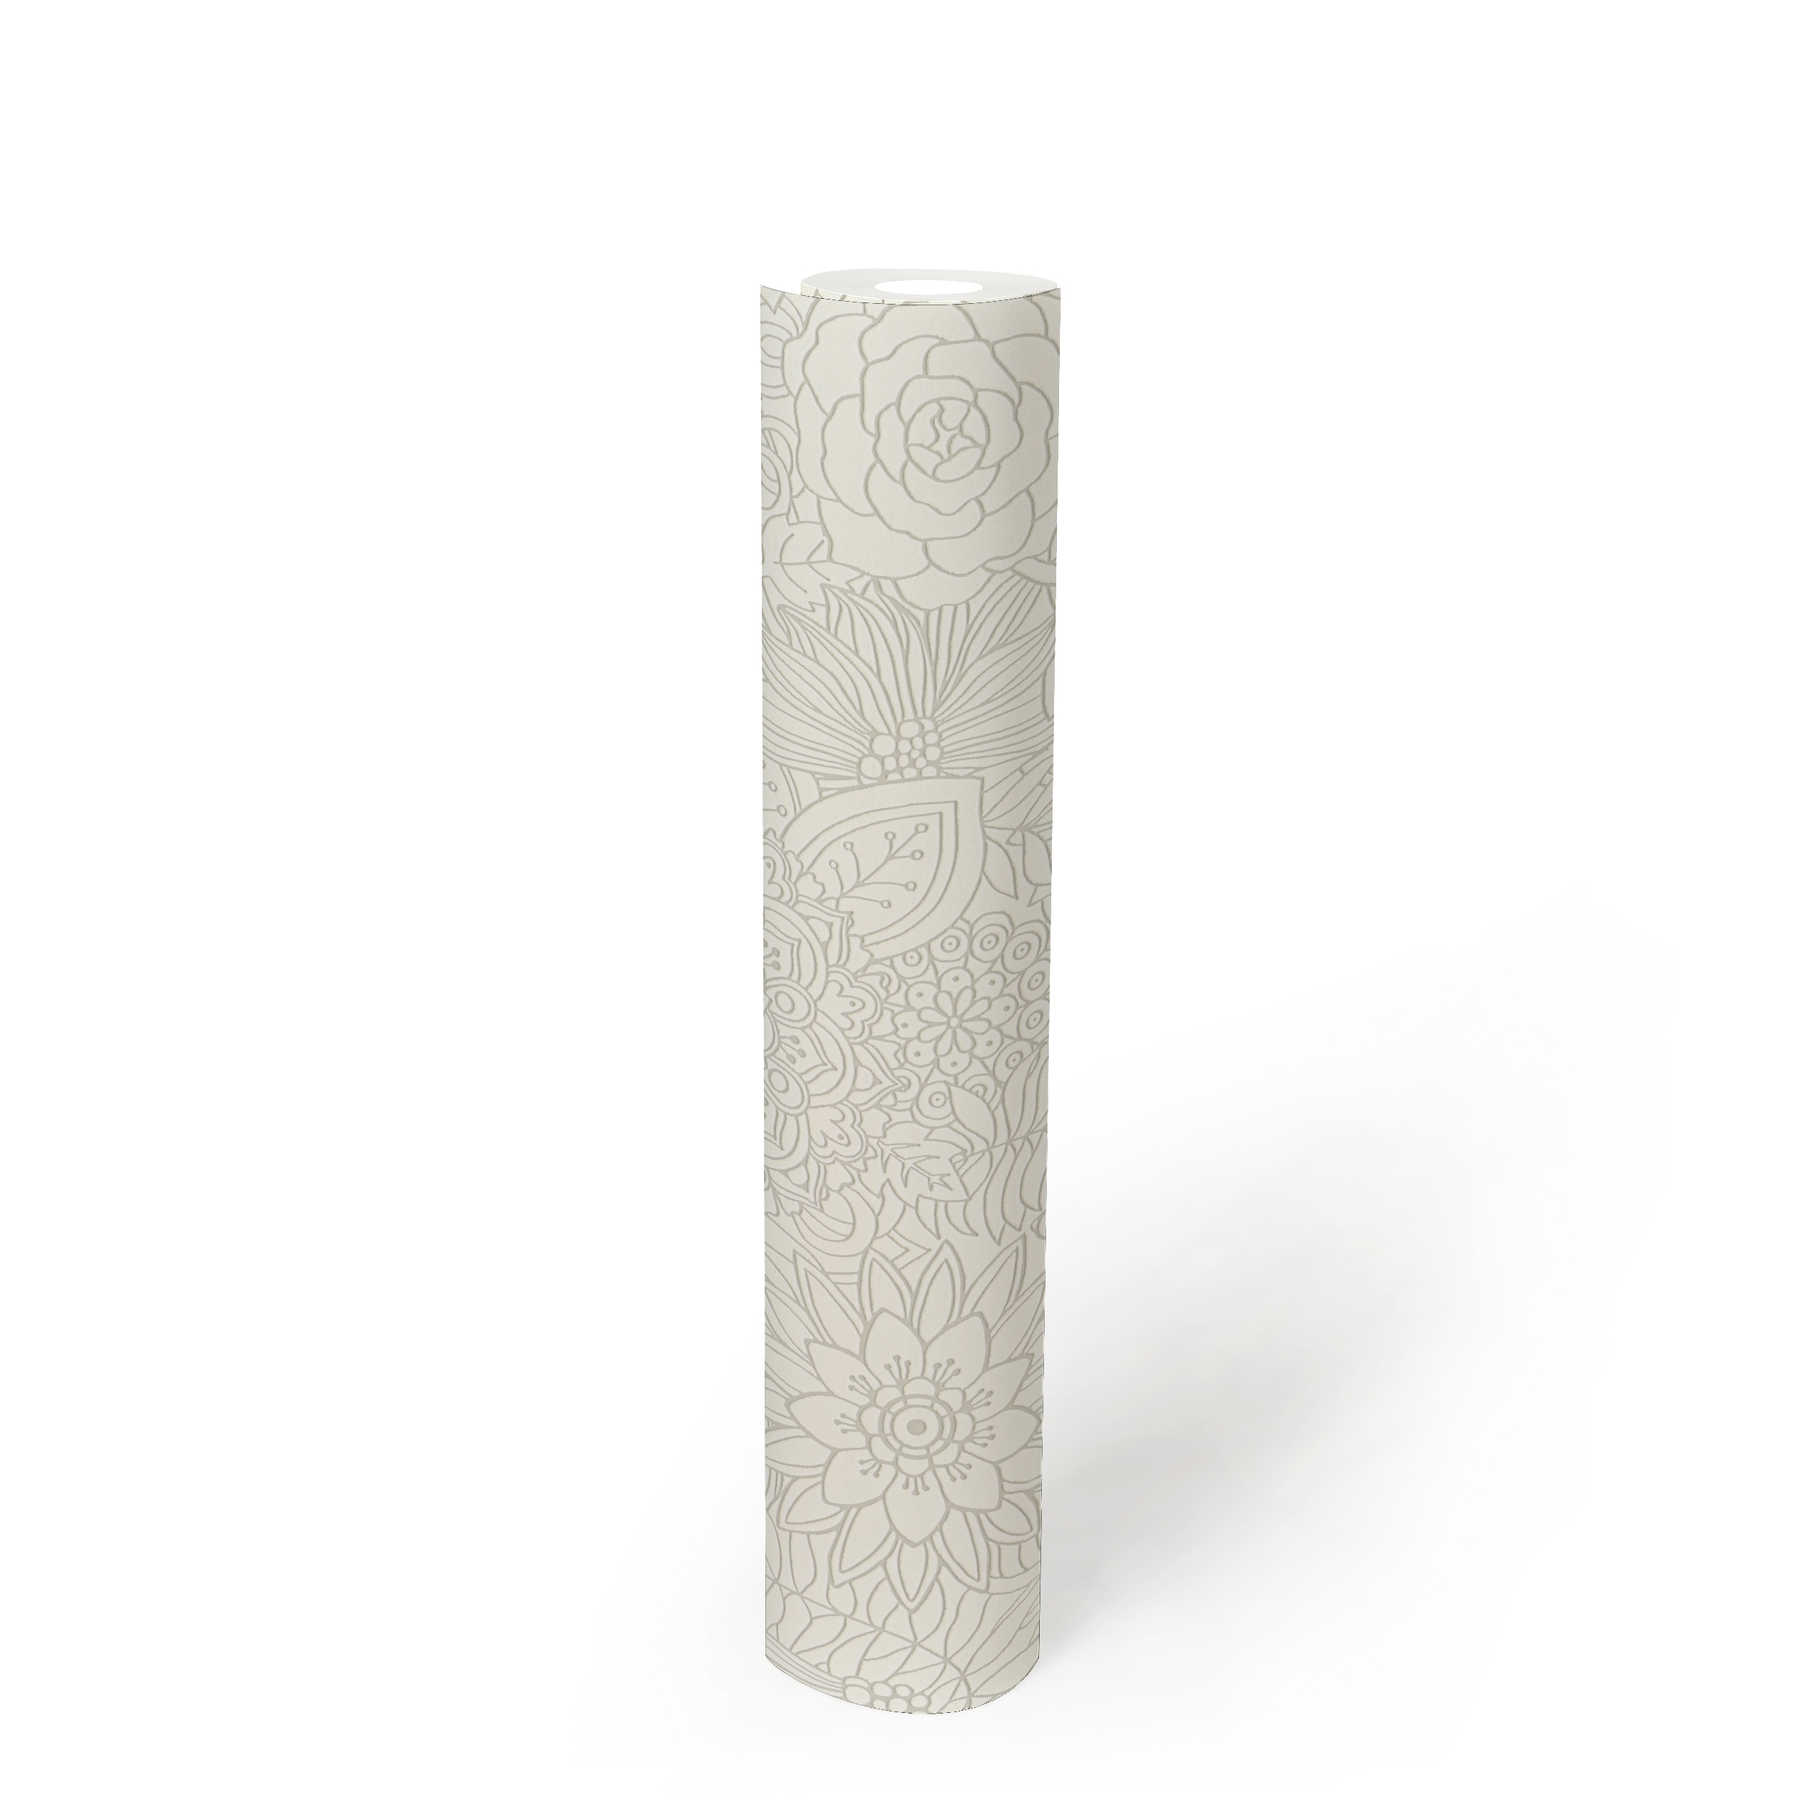             Non-woven wallpaper floral doodle design, matte & glossy - white,
        